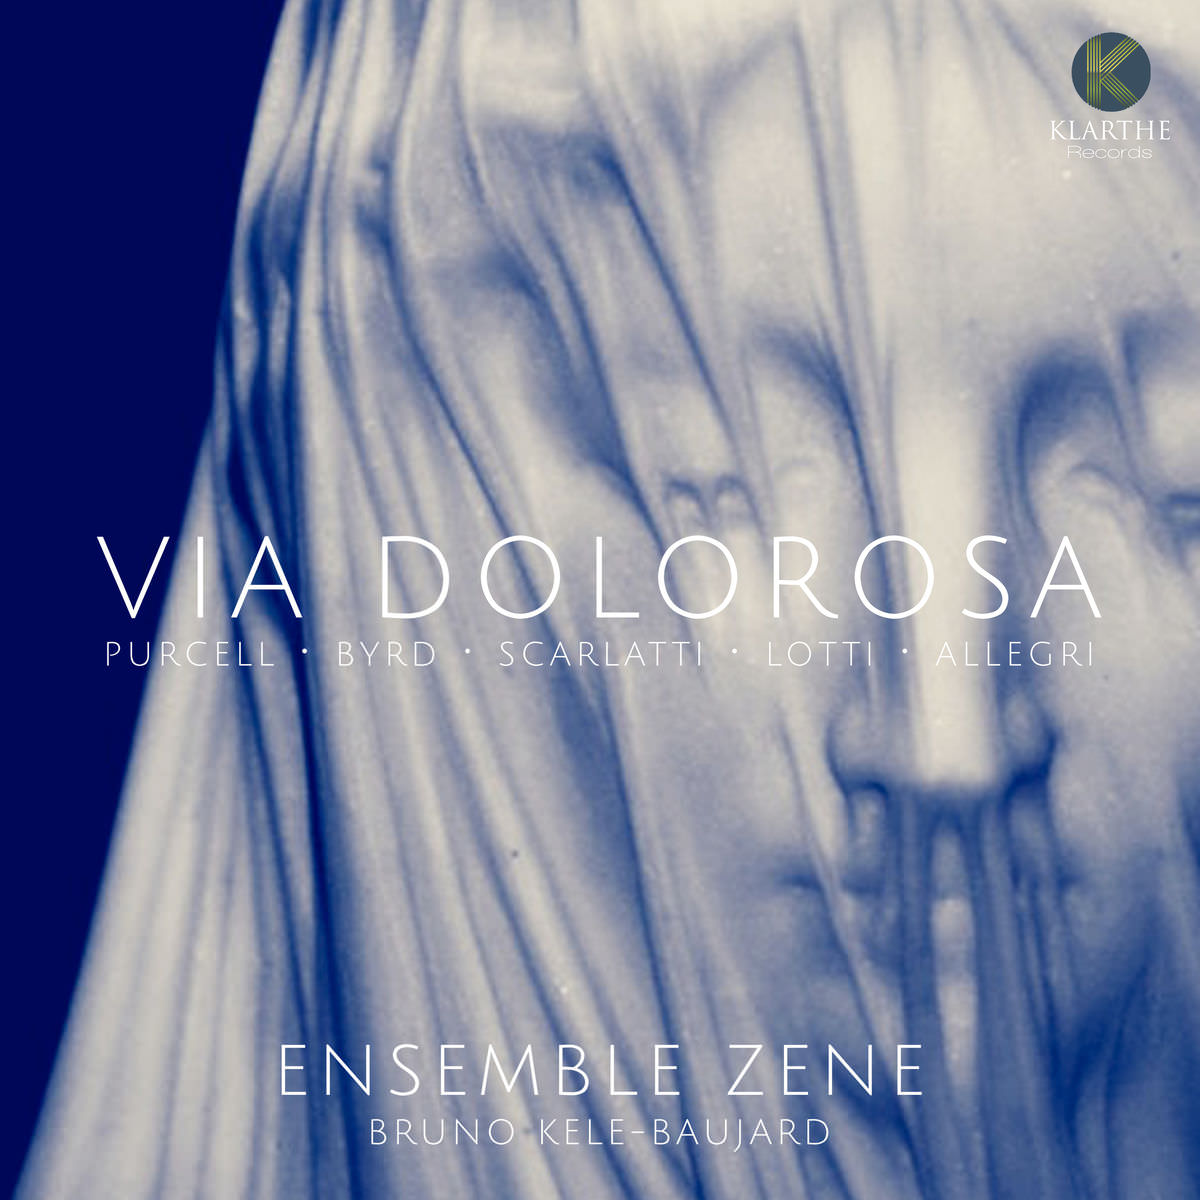 Ensemble Zene & Bruno Kele-Baujard - Purcell, Byrd, Scarlatti, Lotti & Allegri: Via Dolorosa (2018) [FLAC 24bit/96kHz]